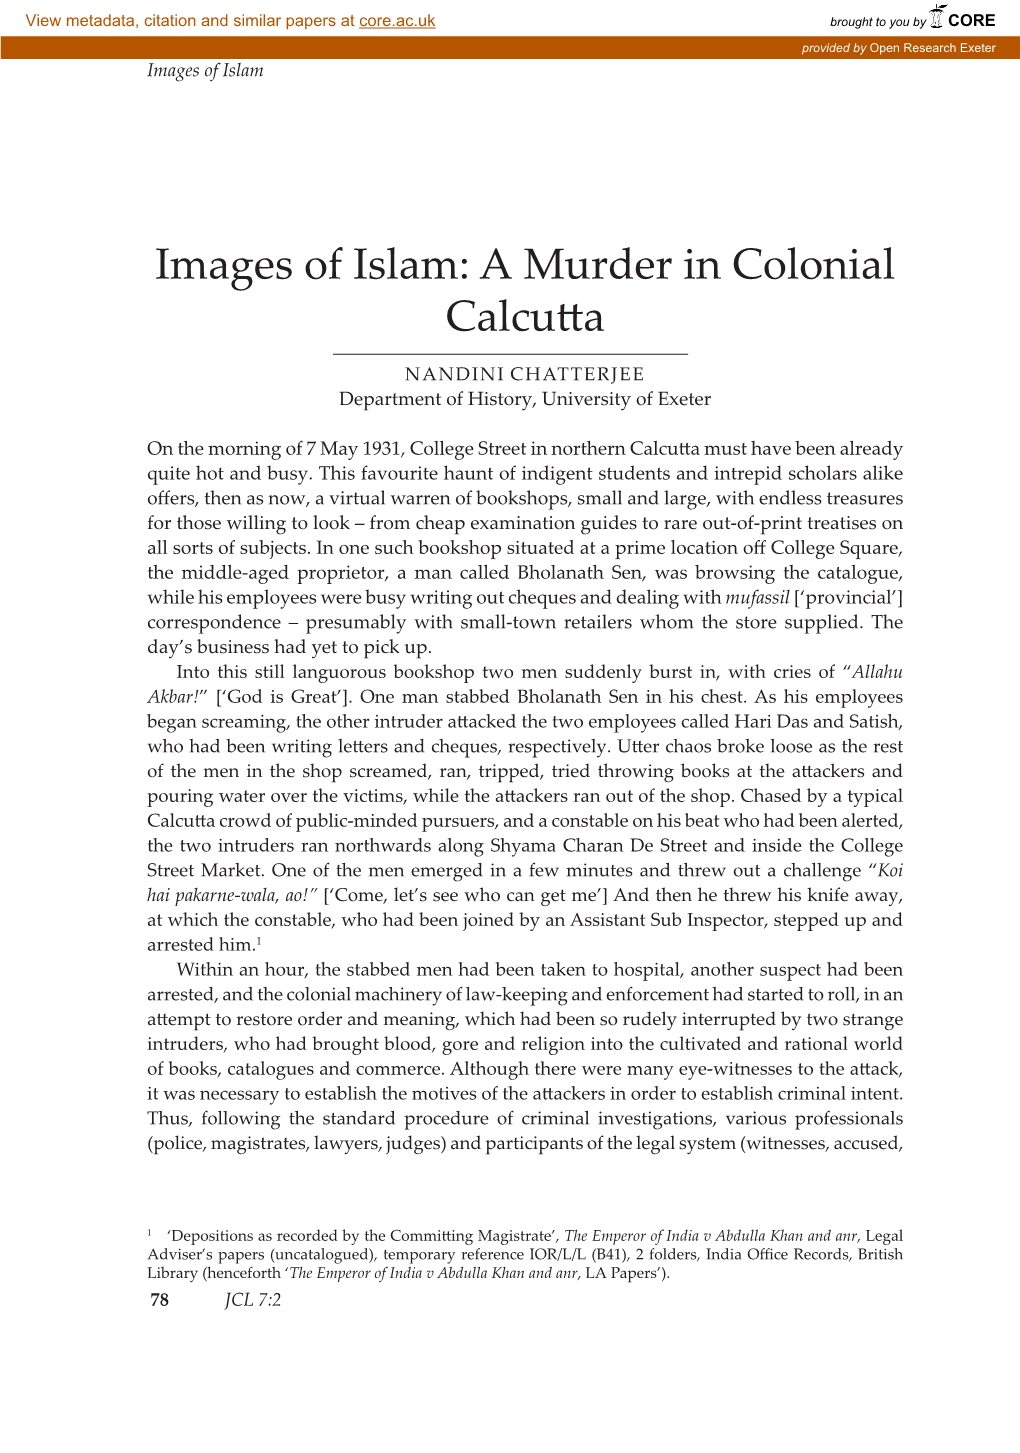 Images of Islam: a Murder in Colonial Calcutta